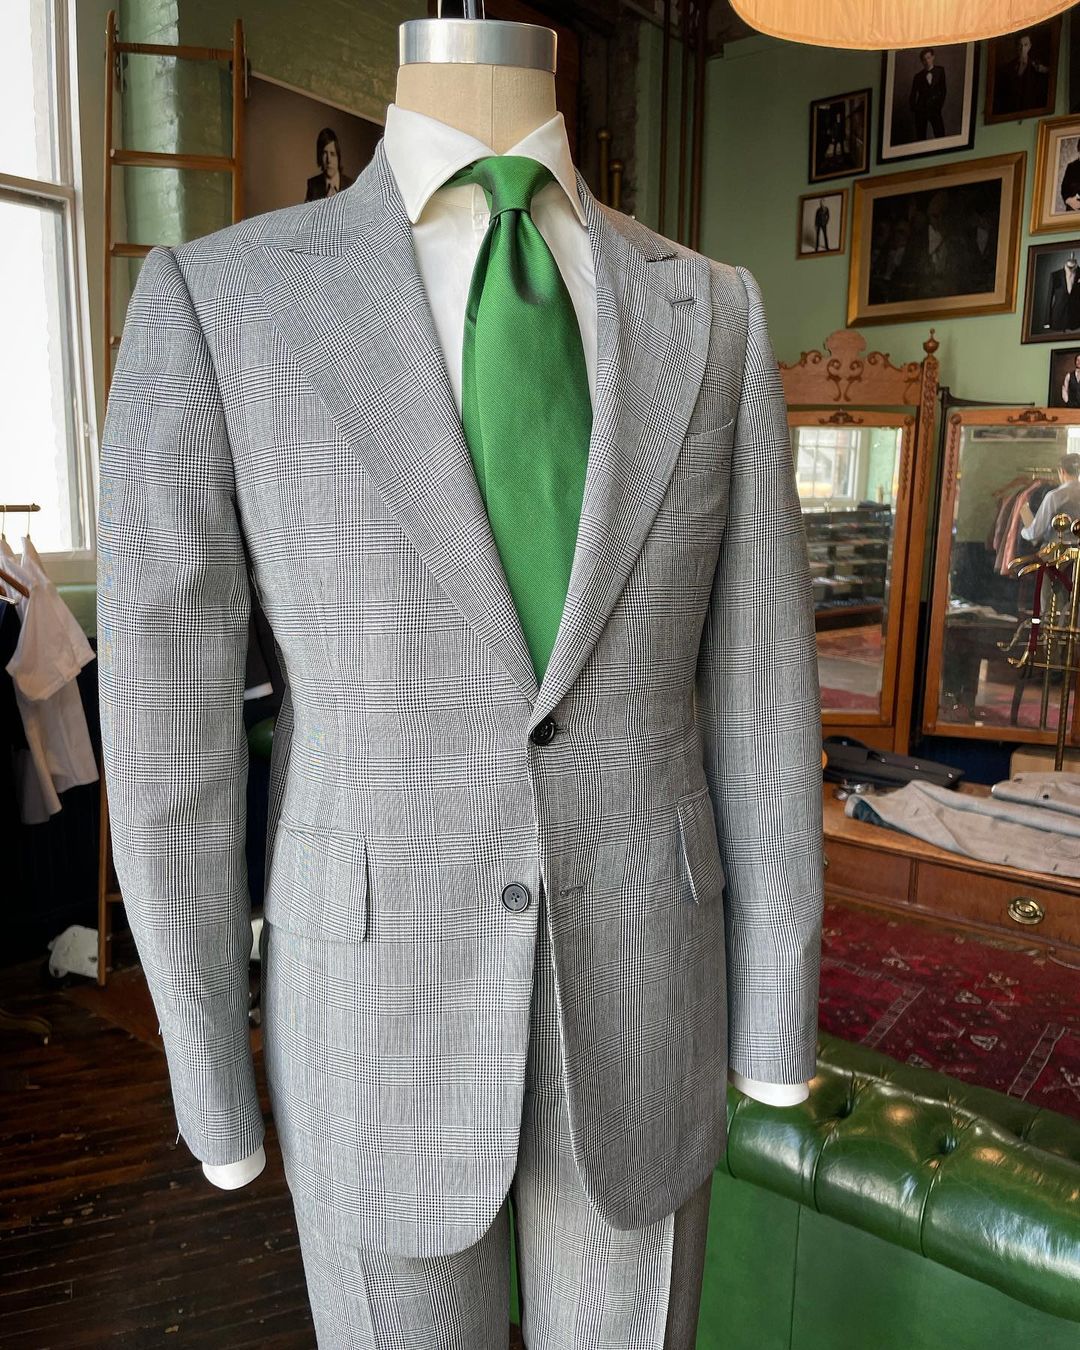 Light grey suit on display